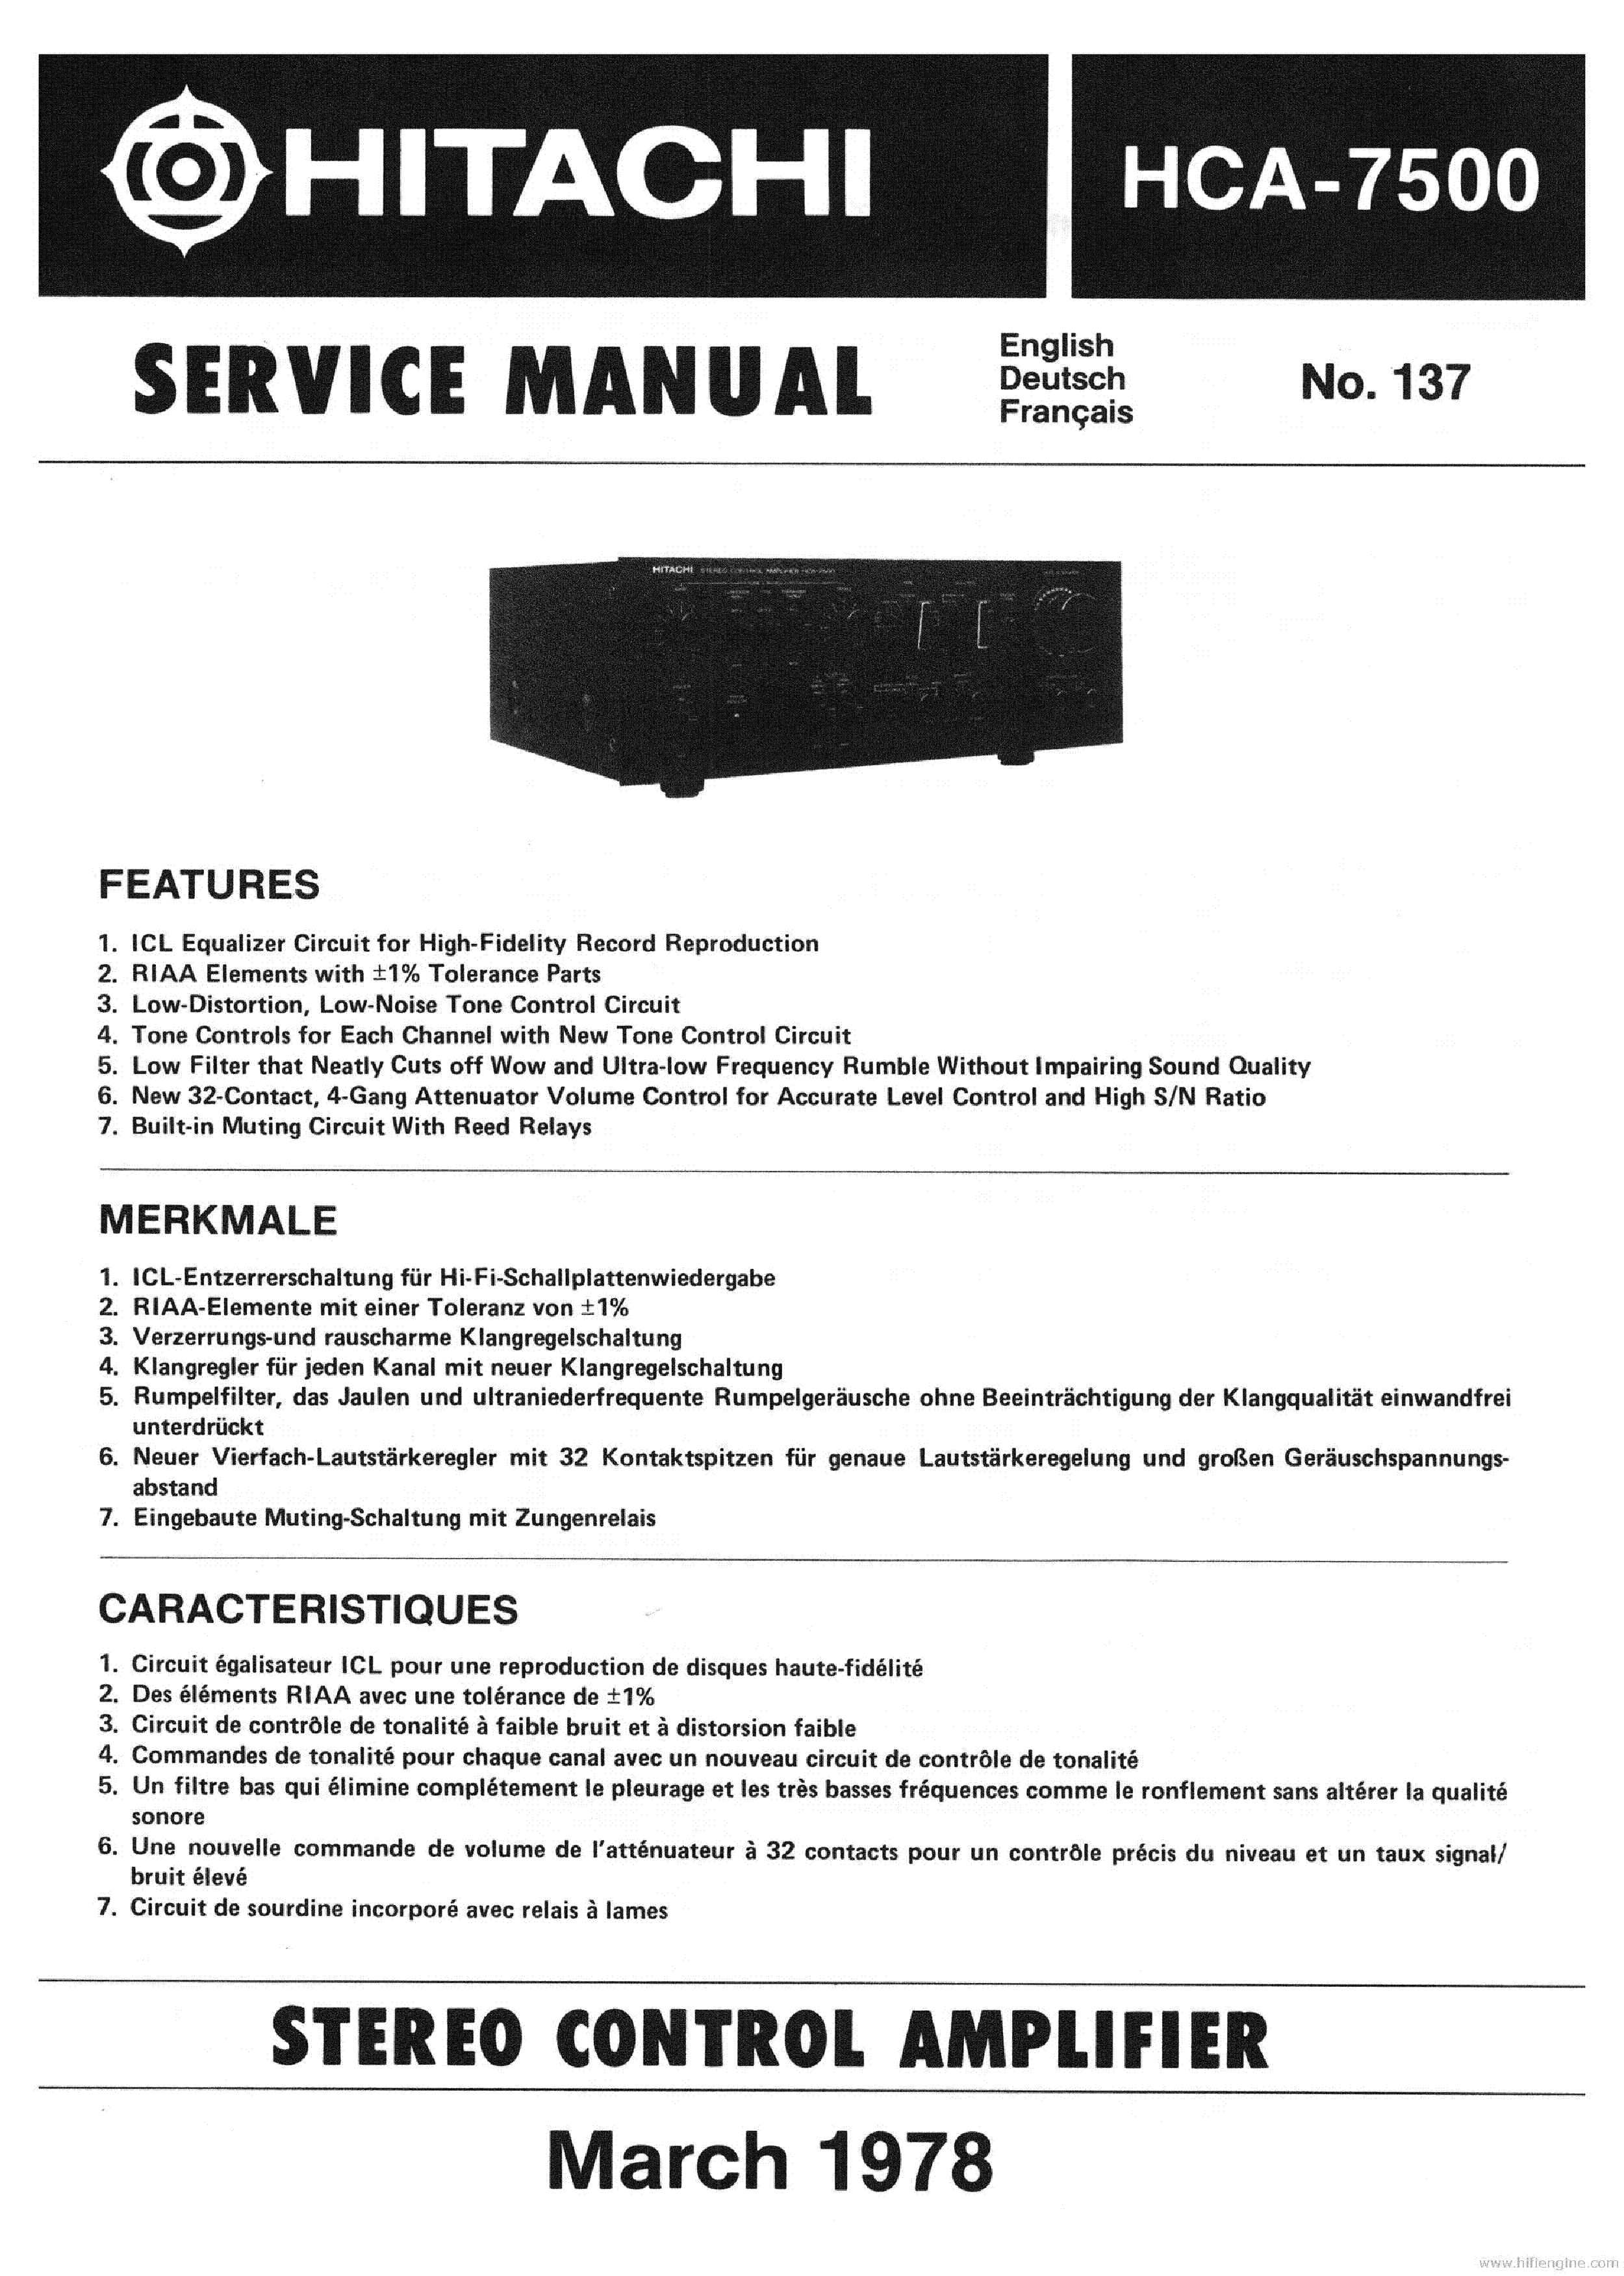 HITACHI HCA-7500 service manual (1st page)